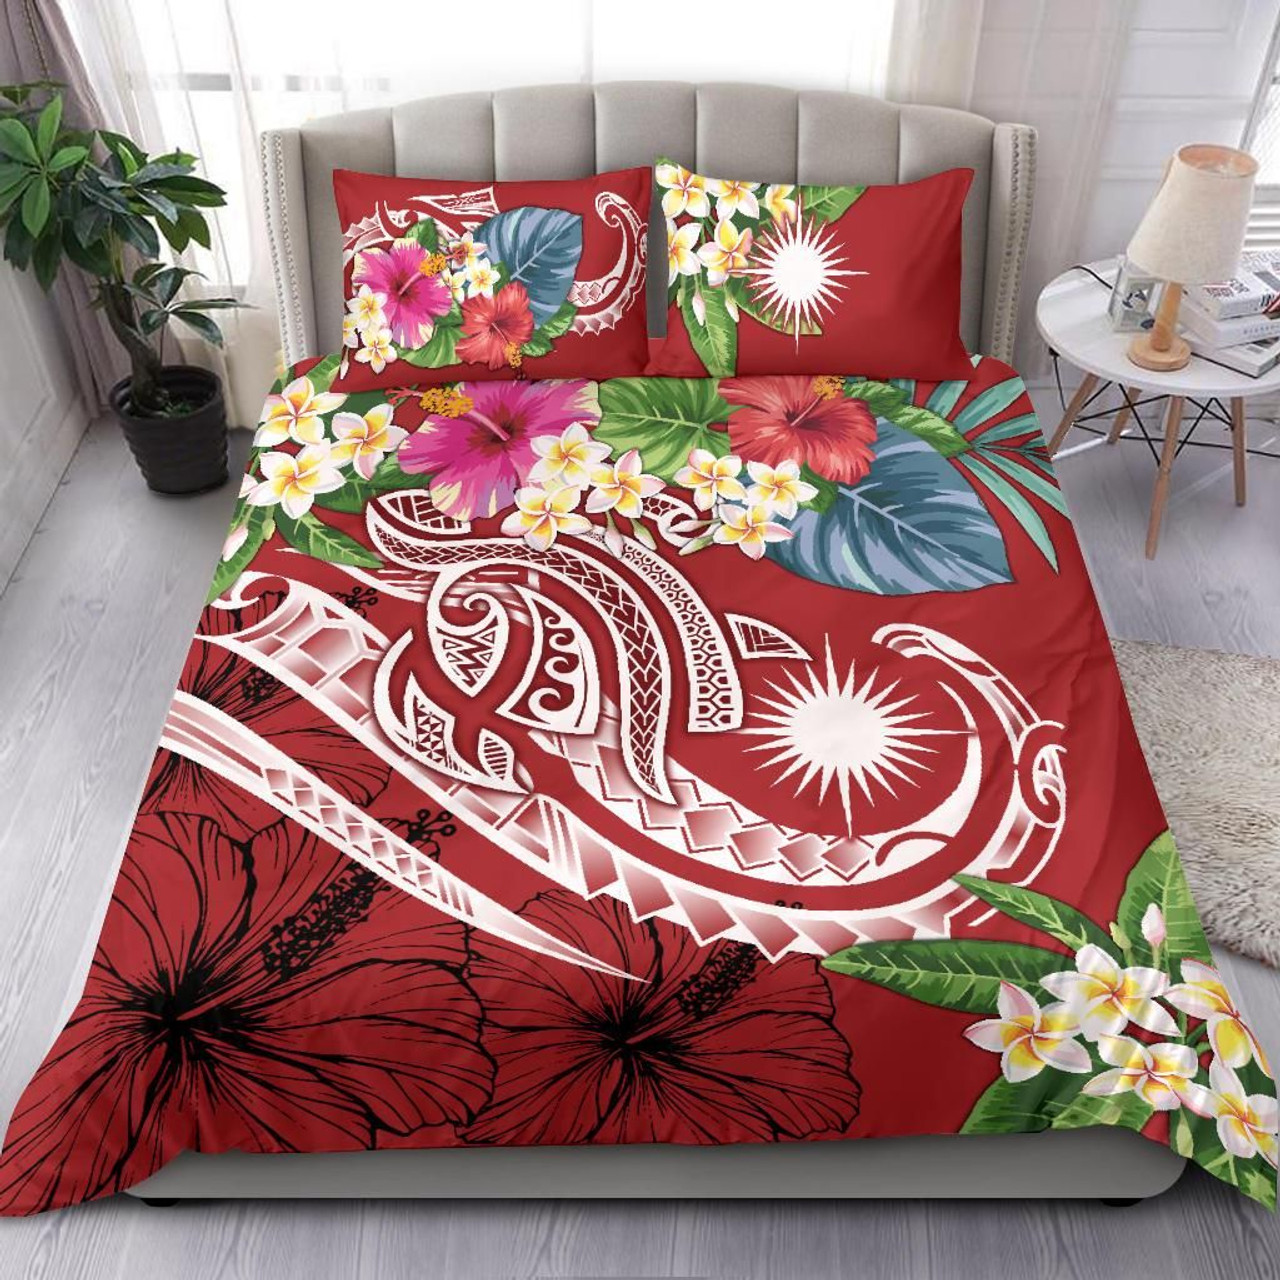 Marshall Islands Polynesian Bedding Set - Summer Plumeria (Red) 1